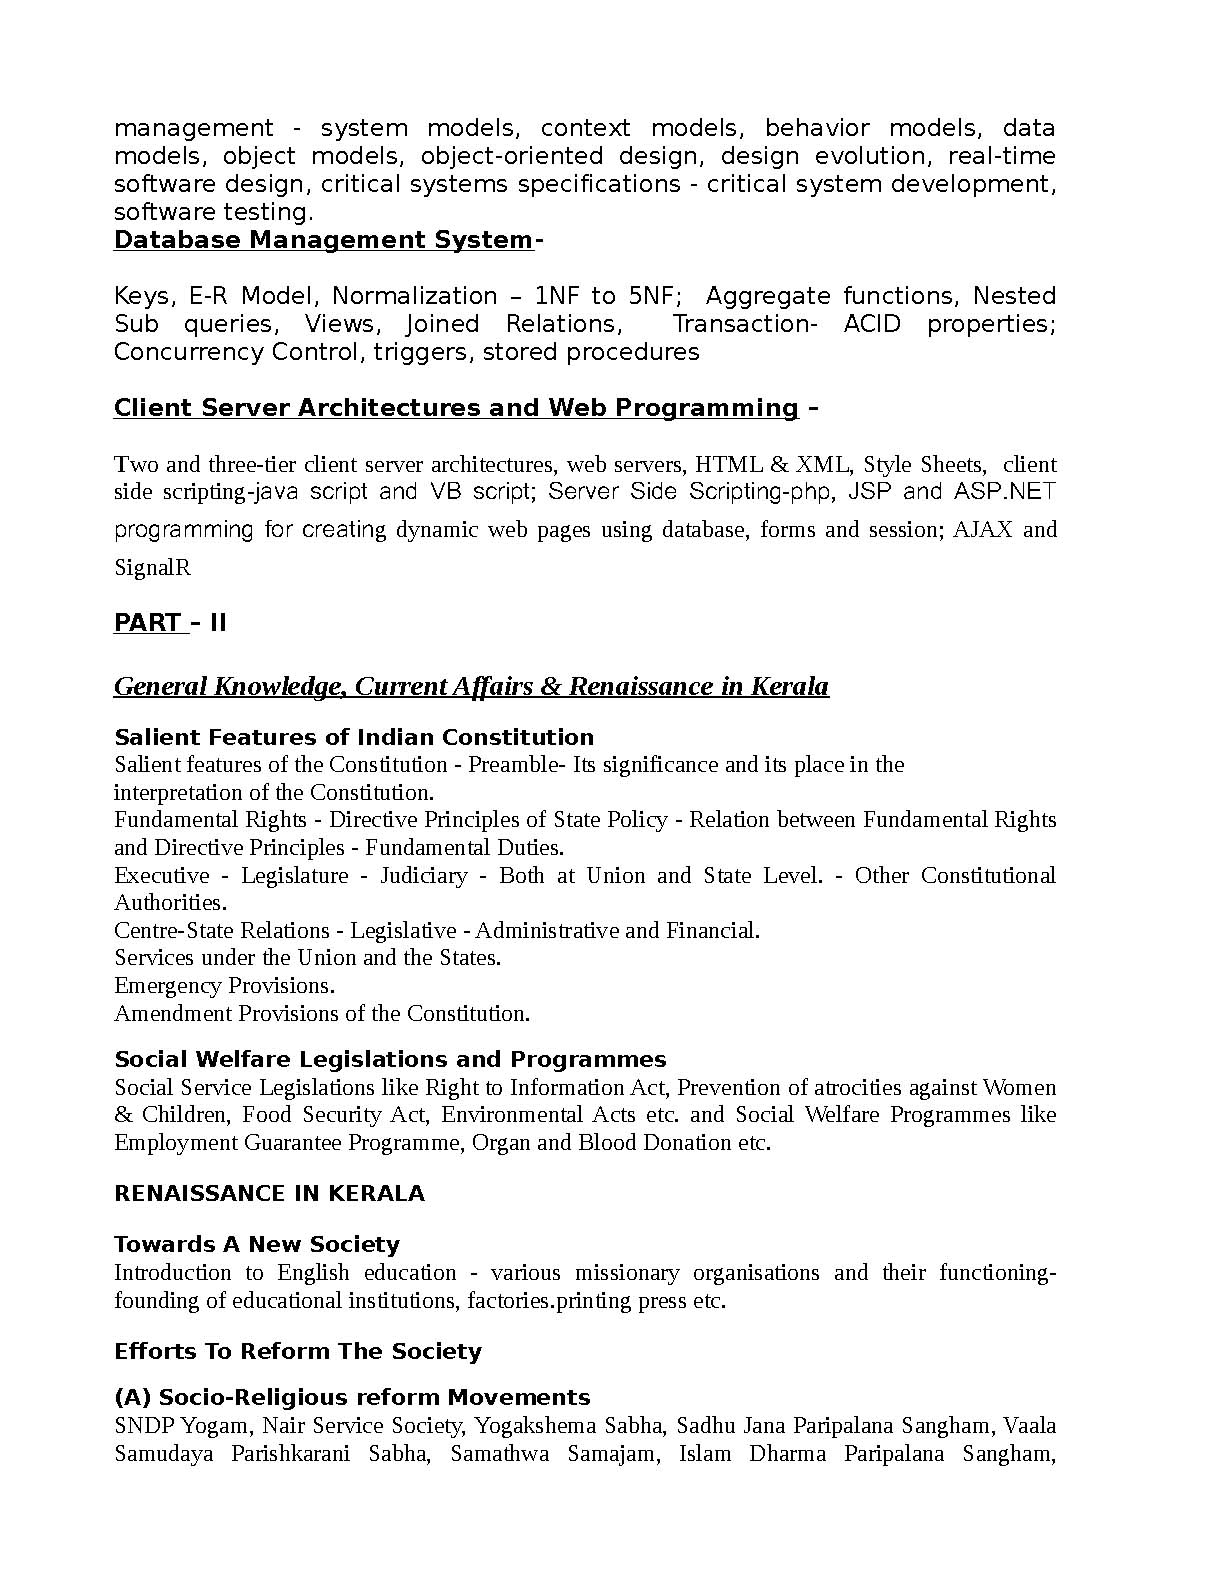 KPSC Exam Syllabus 2019 System Analyst or Senior Programmer - Notification Image 4